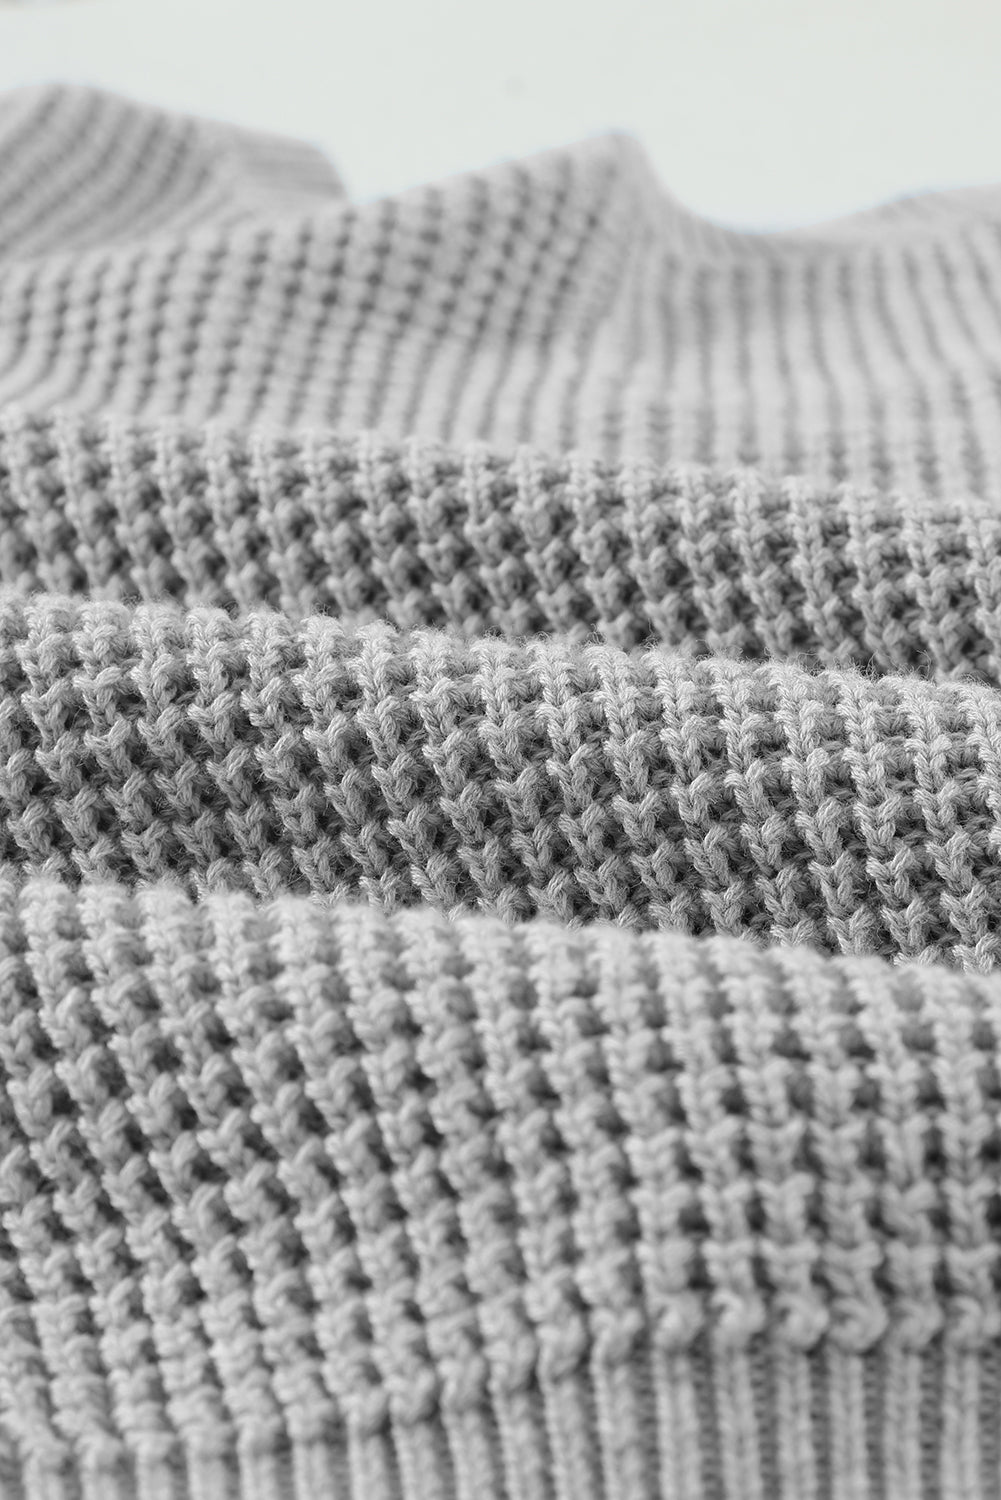 Strawberry Fields Cross Back 100% Cotton Womens Sweater